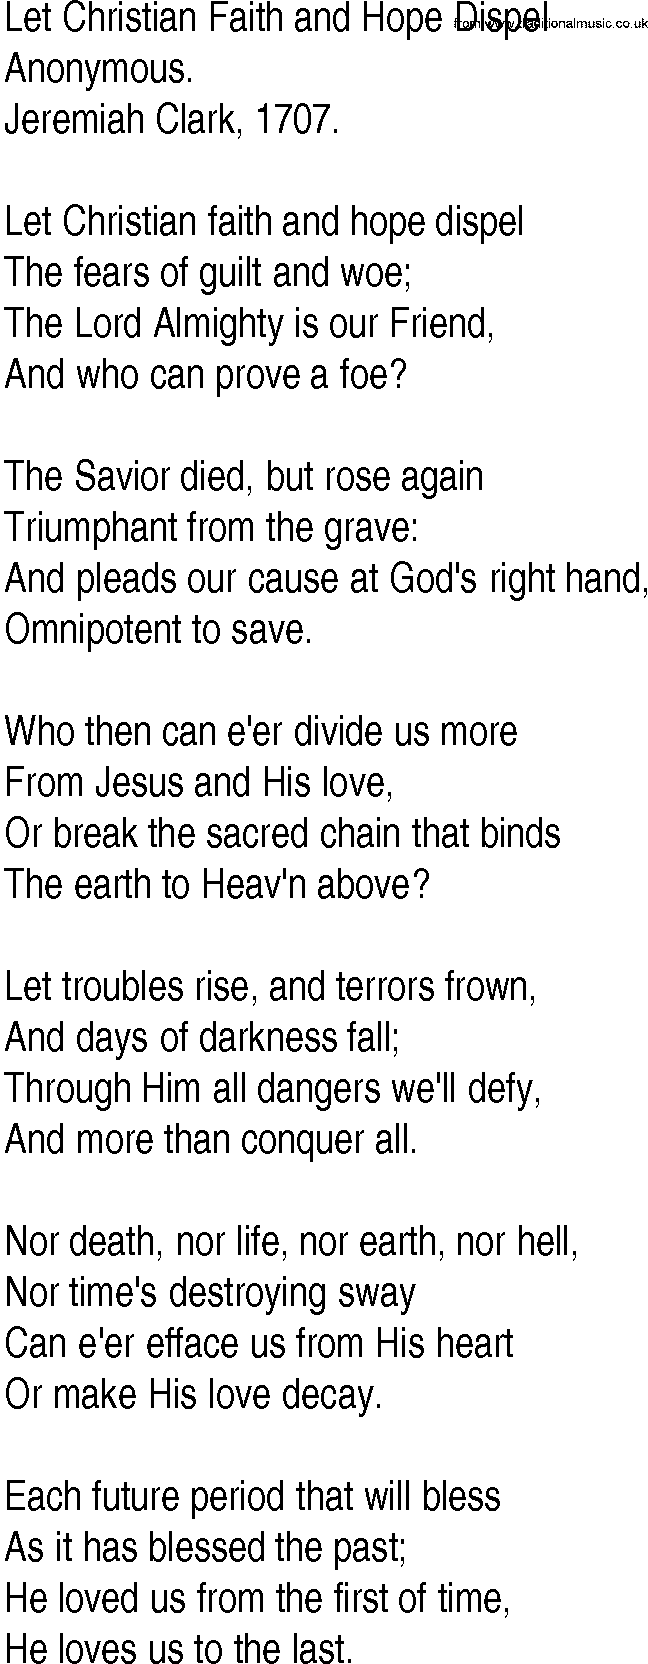 Hymn and Gospel Song: Let Christian Faith and Hope Dispel by Anonymous lyrics